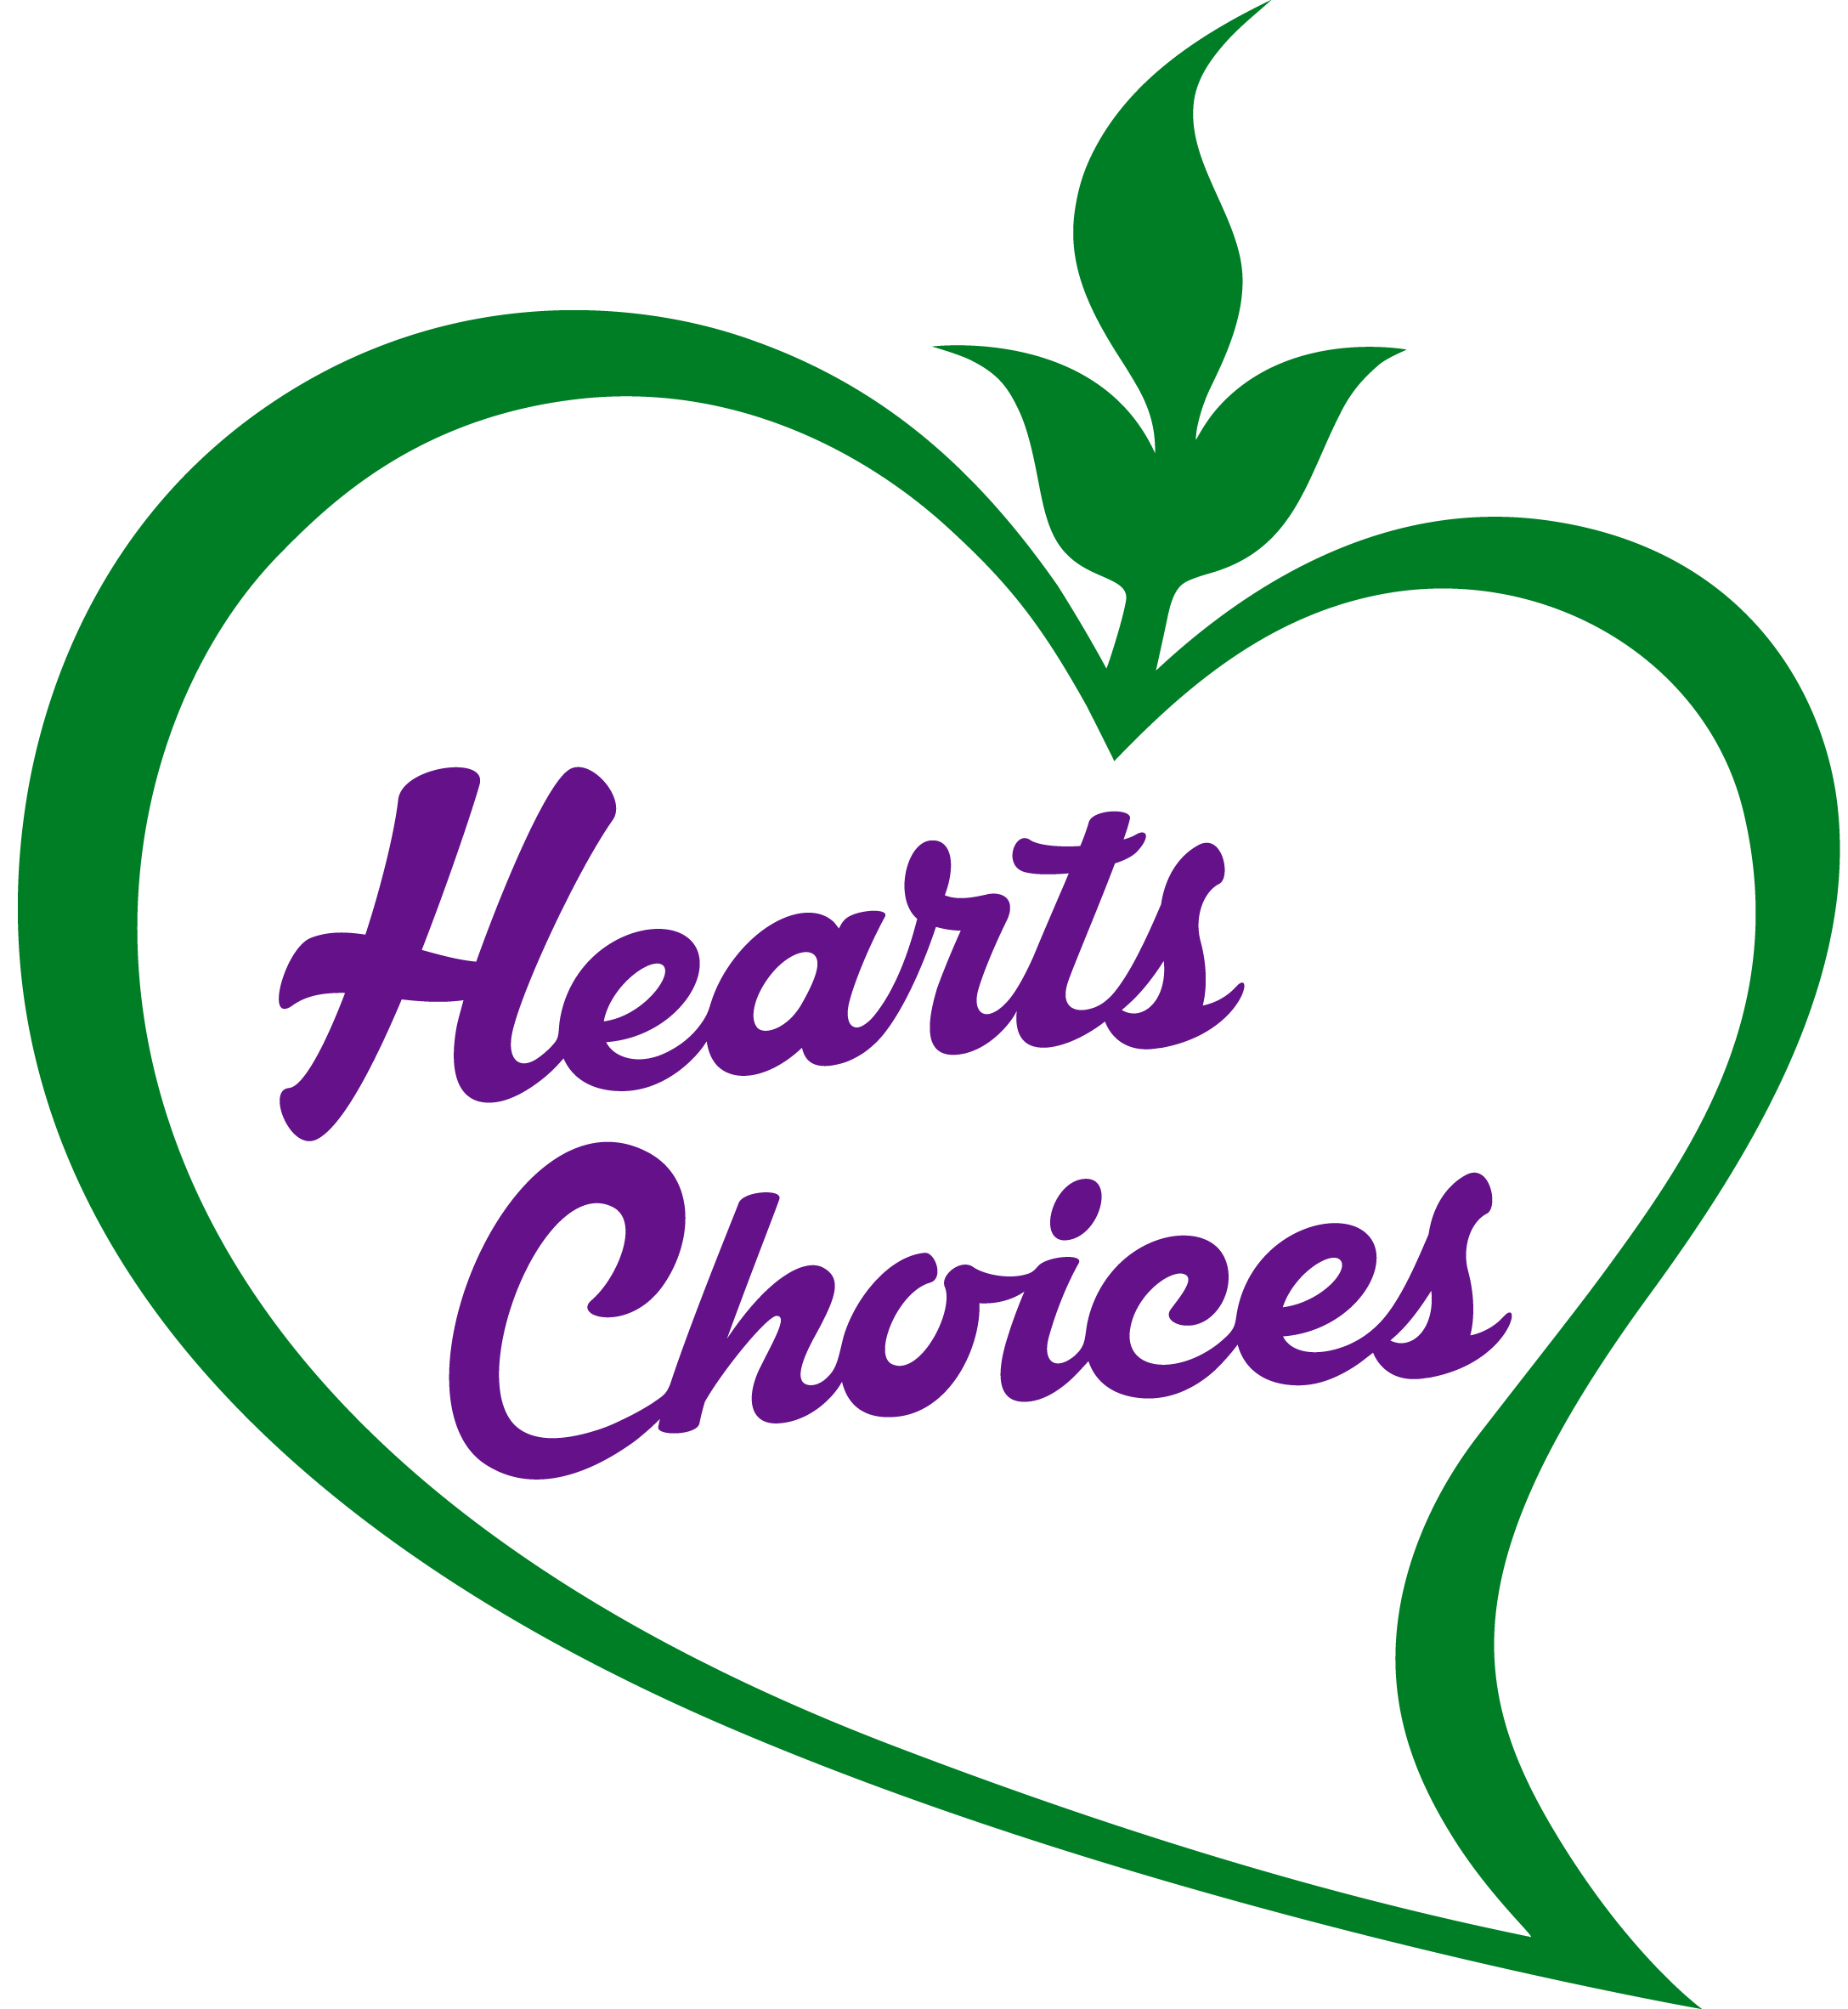 Hearts Choices